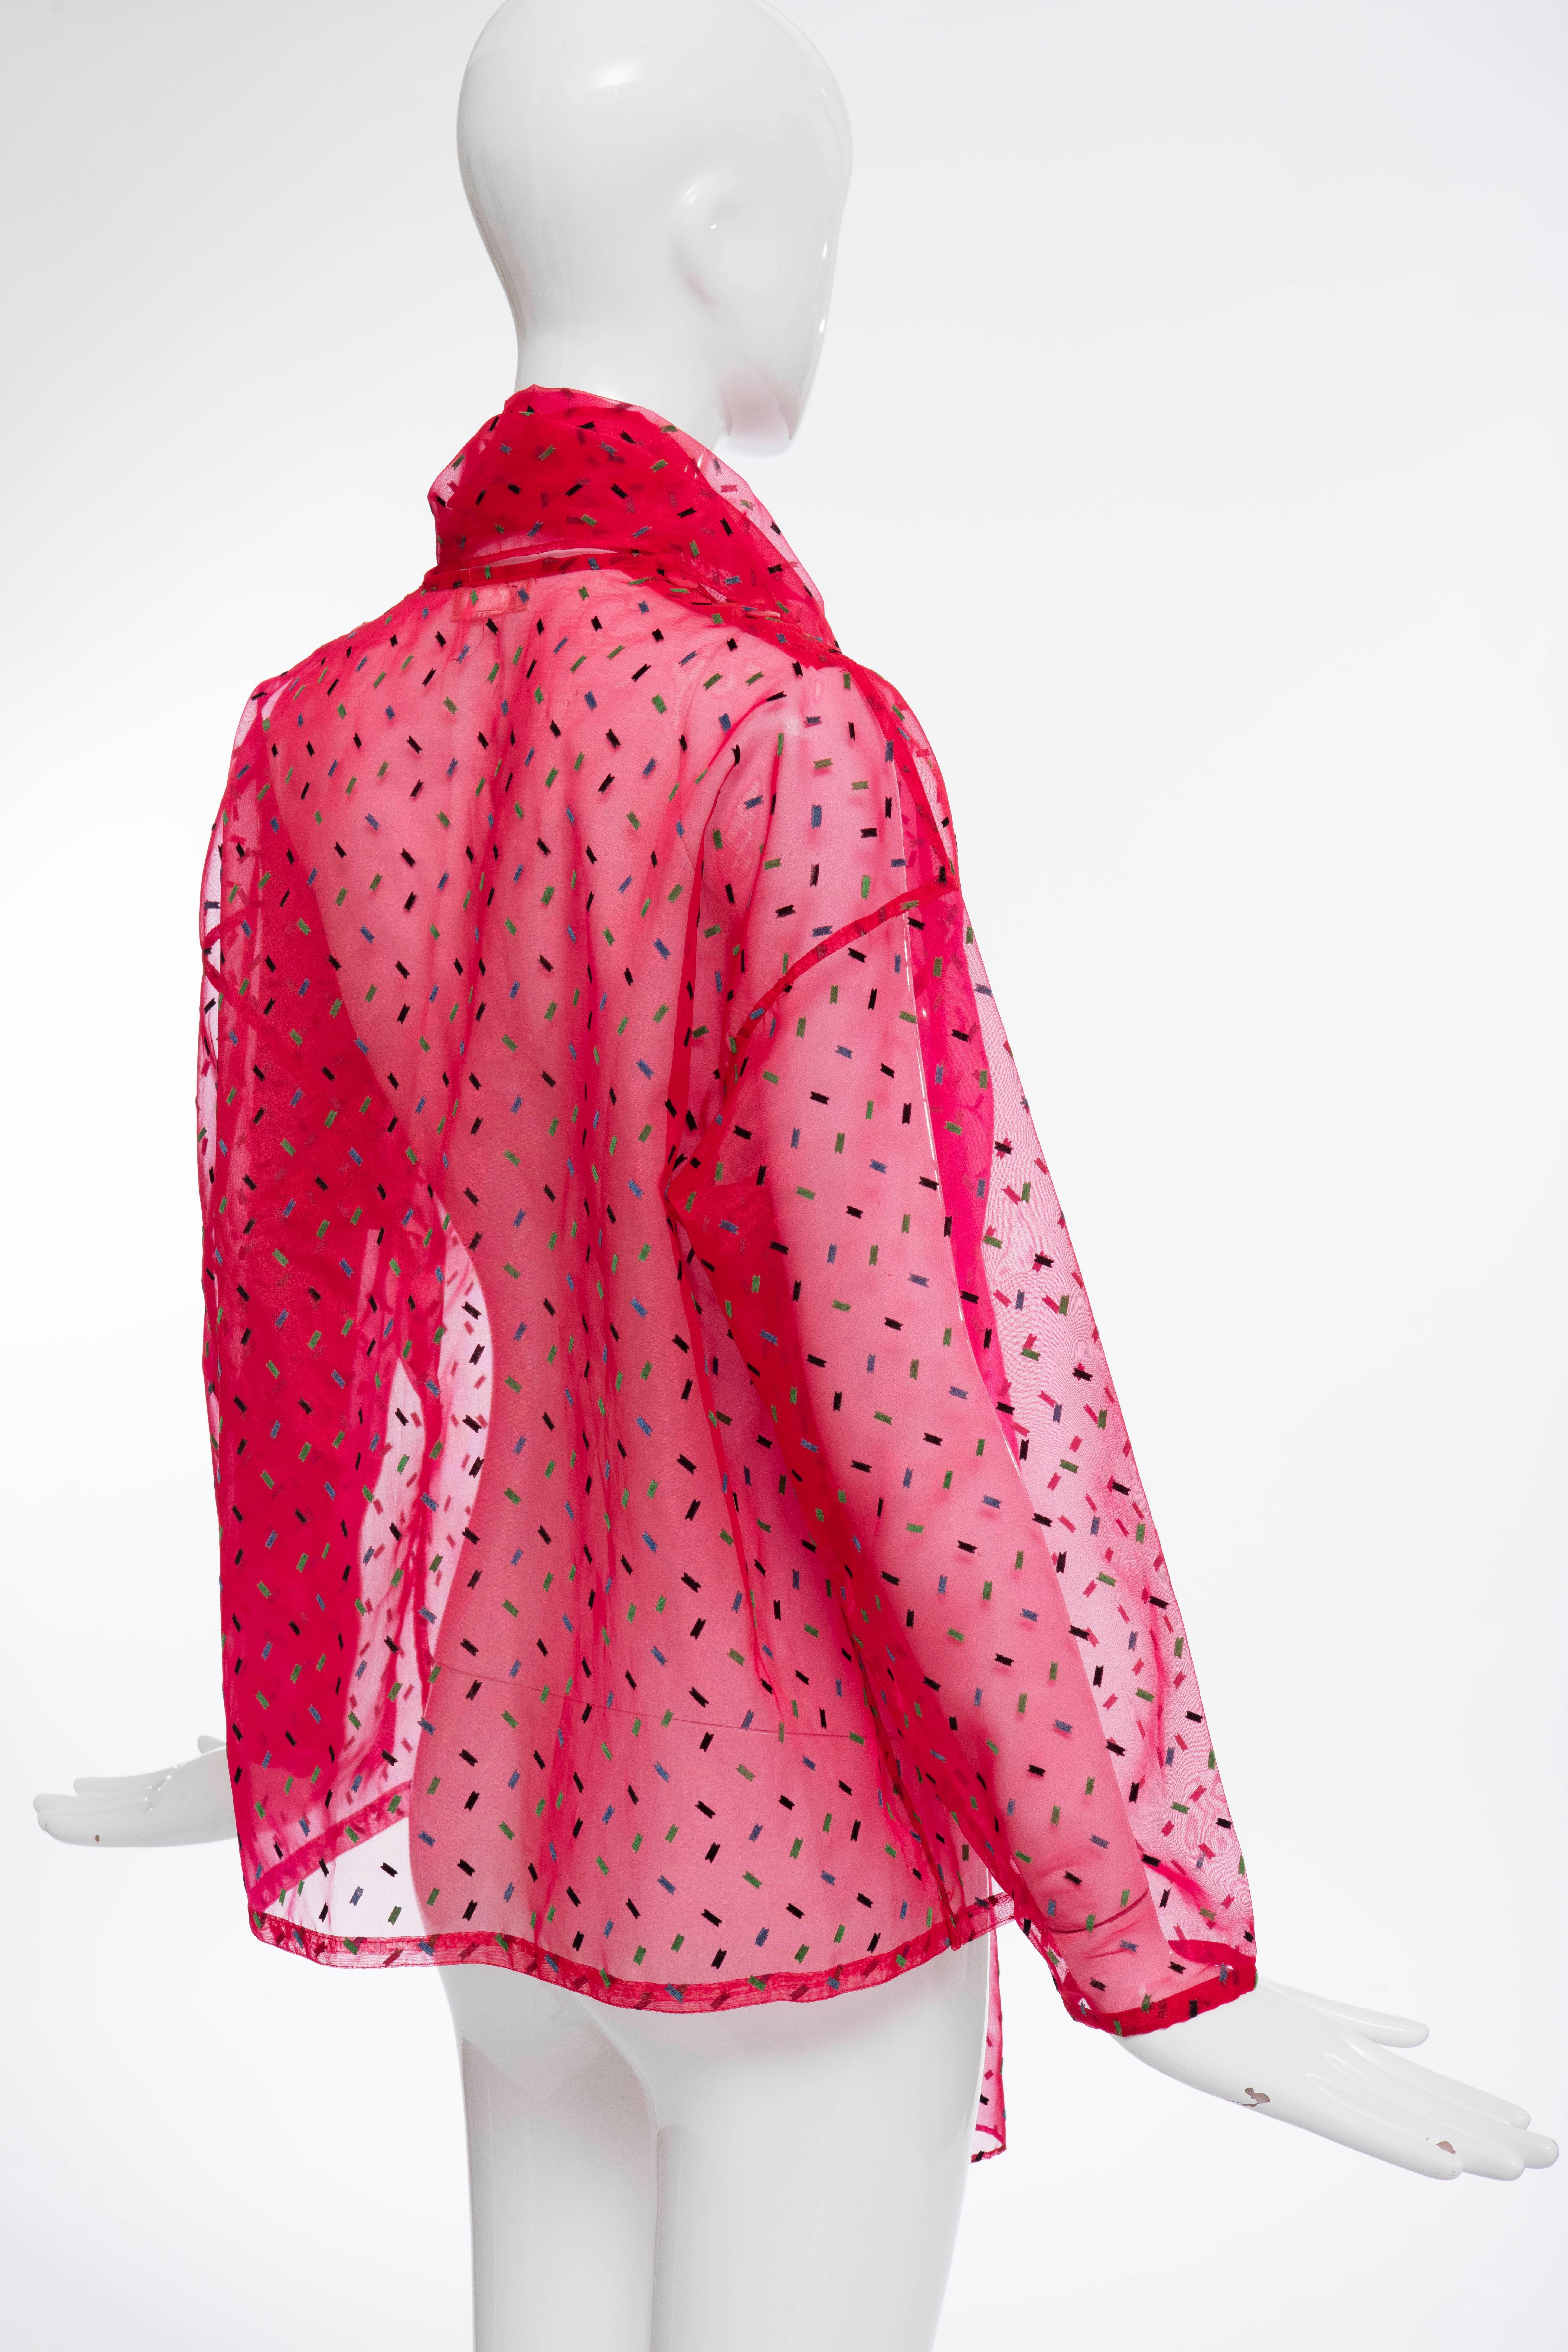 Kansai Yamamoto Red Sheer Silk Nylon Velvet Flecks Top & Scarf, Circa 1980's For Sale 3